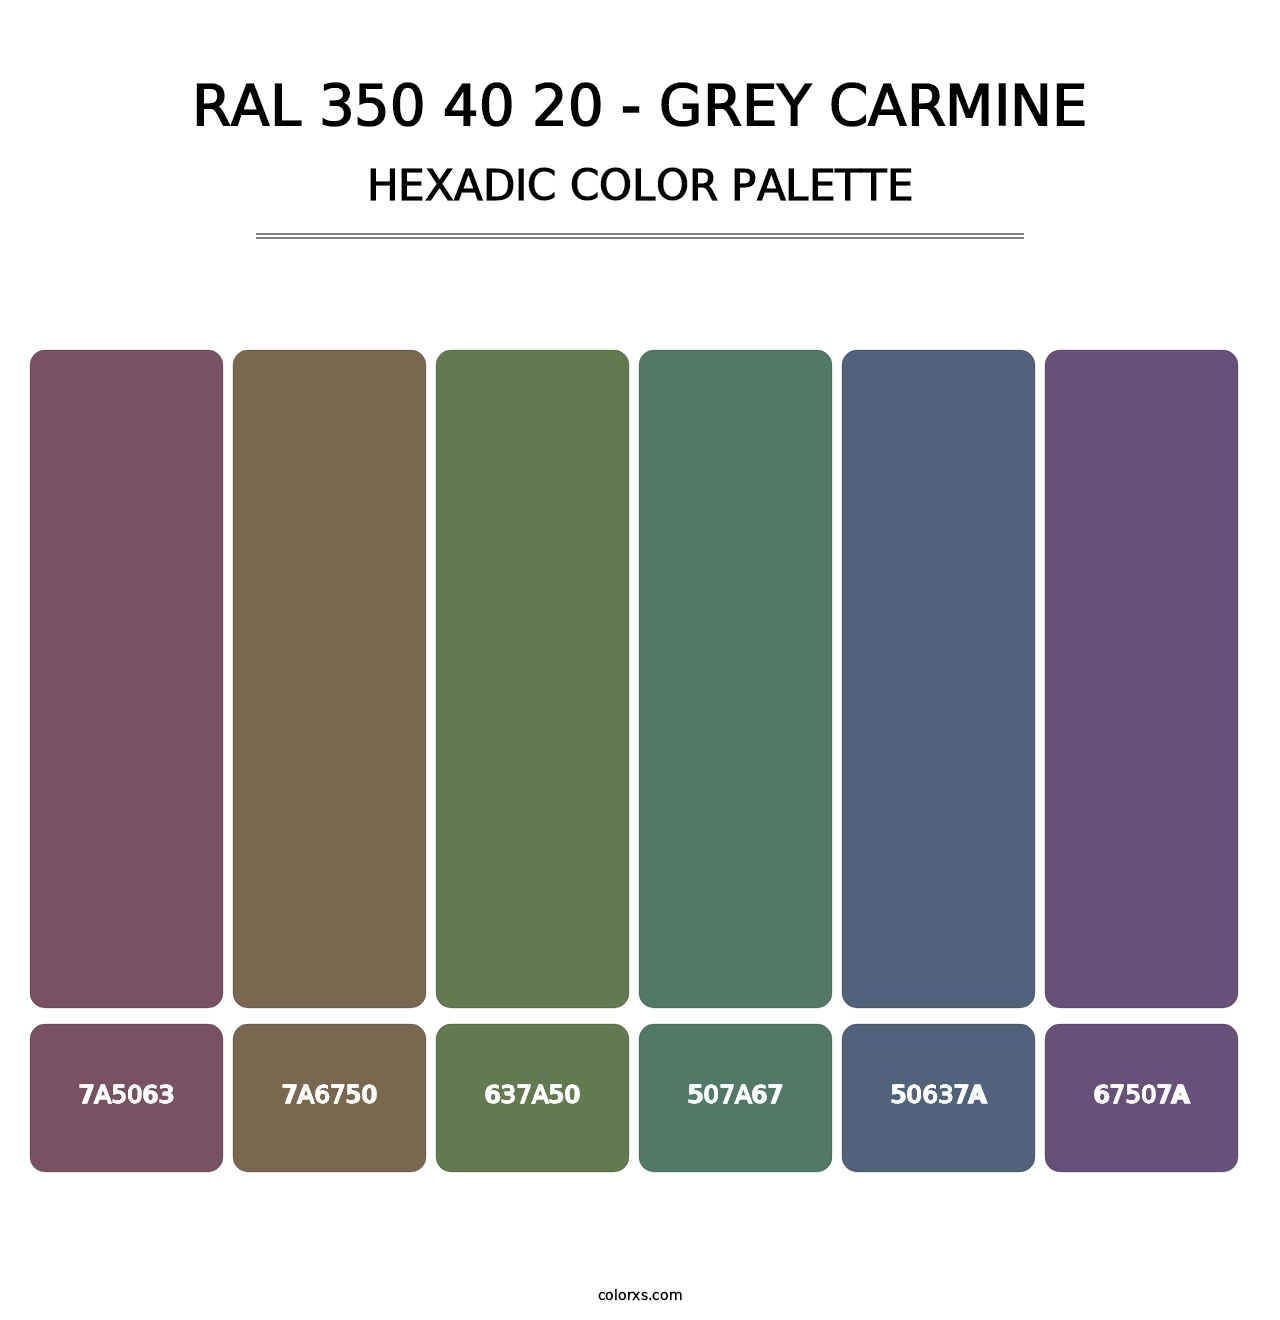 RAL 350 40 20 - Grey Carmine - Hexadic Color Palette